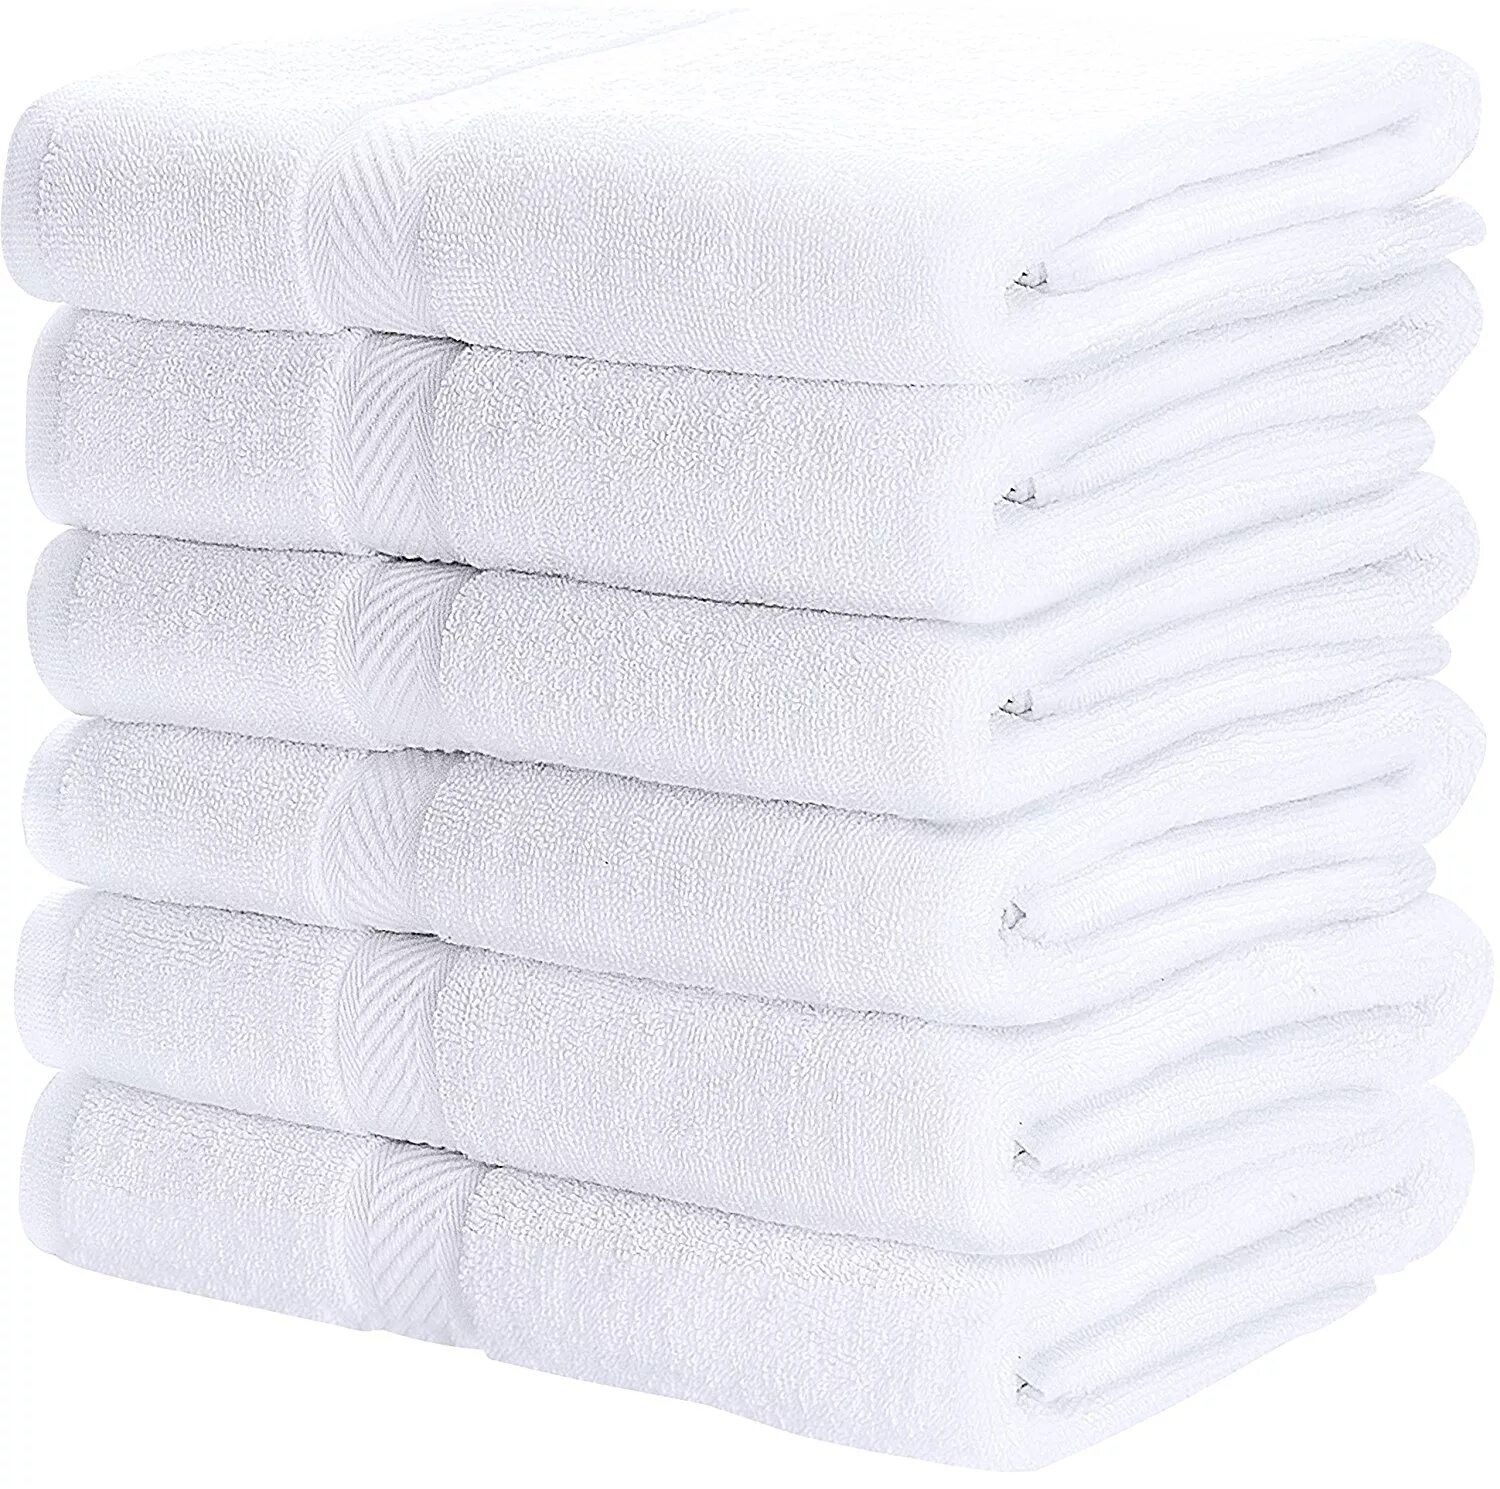 White полотенца. Полотенце Bath Towel. Полотенце 70x140, po0093. Белоснежные полотенца. Стопка белых полотенец.